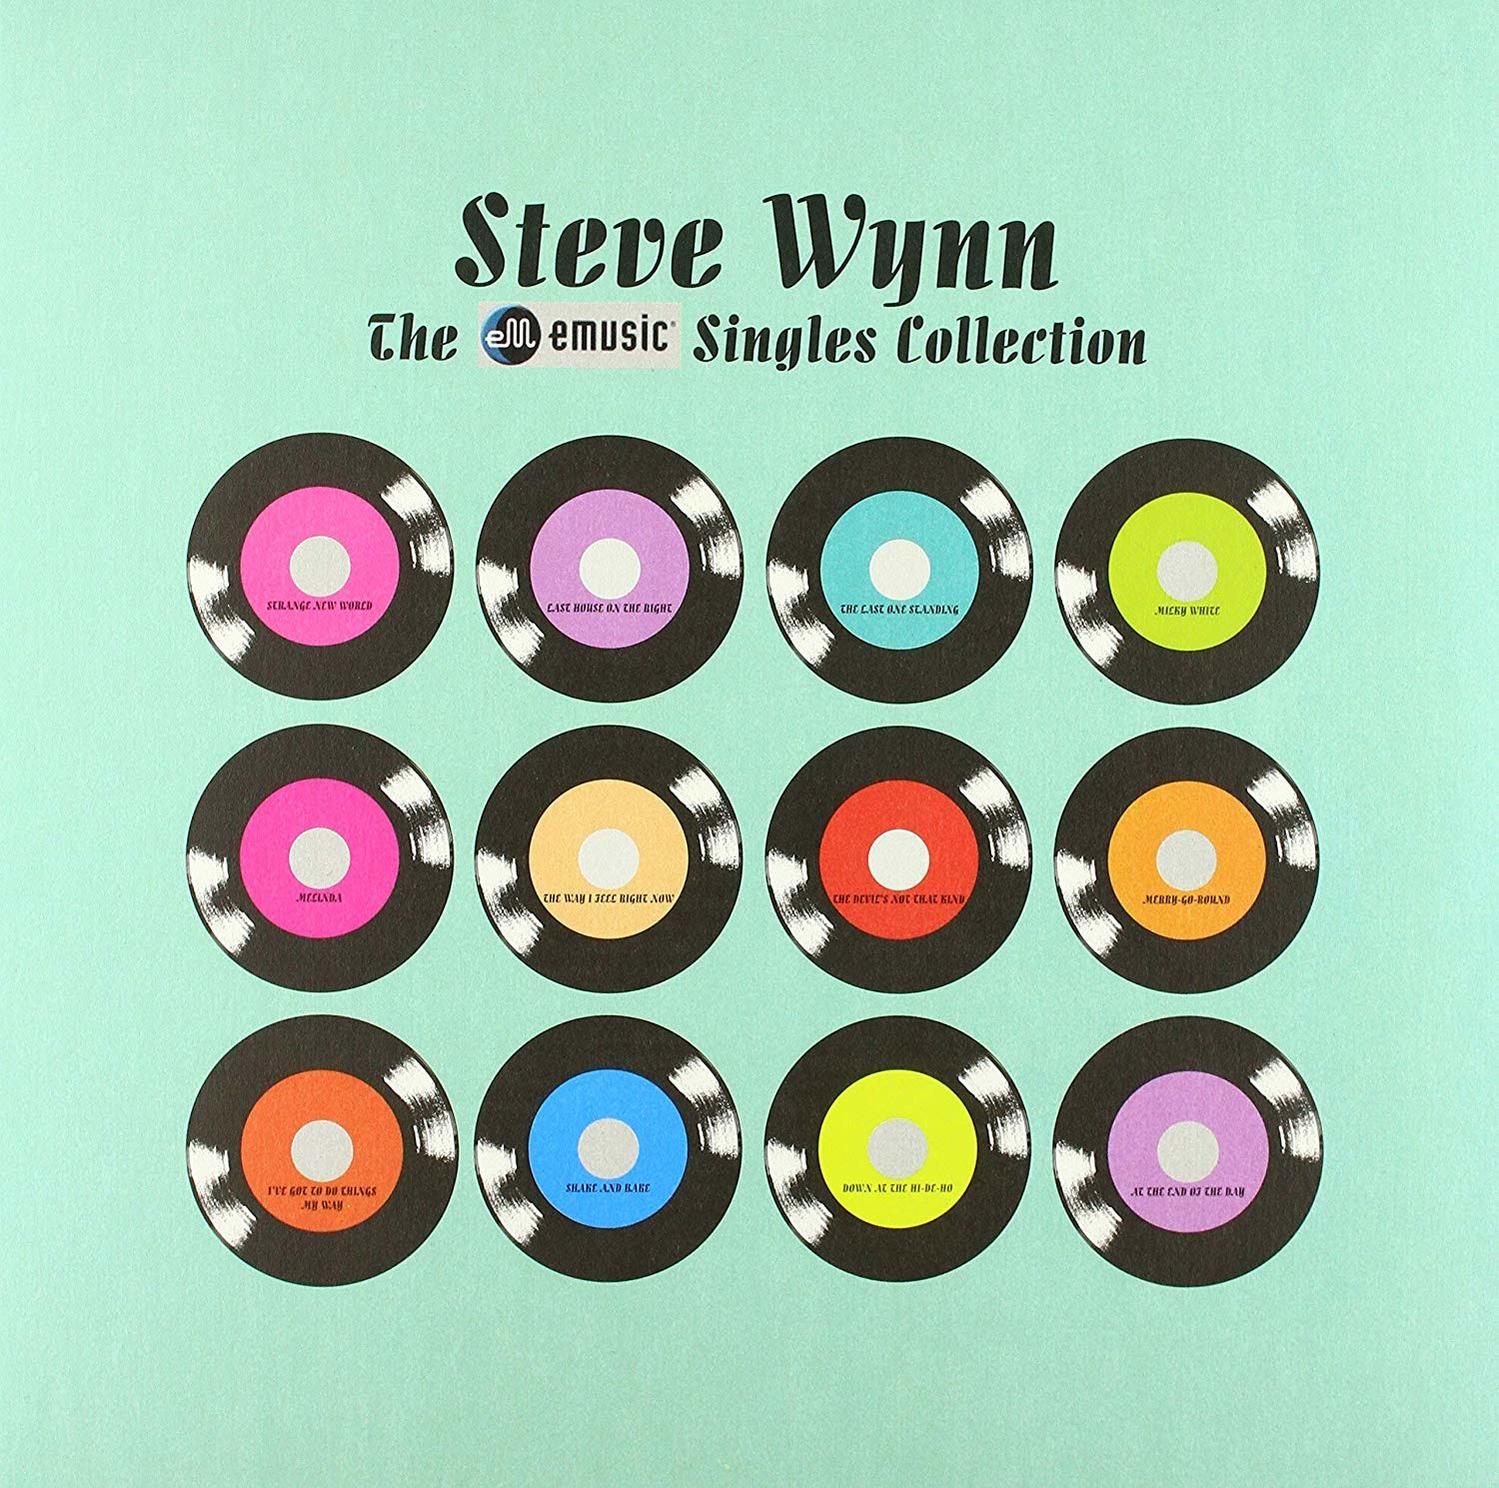 Steve Wynn - singles emusic - the collection (Vinyl)